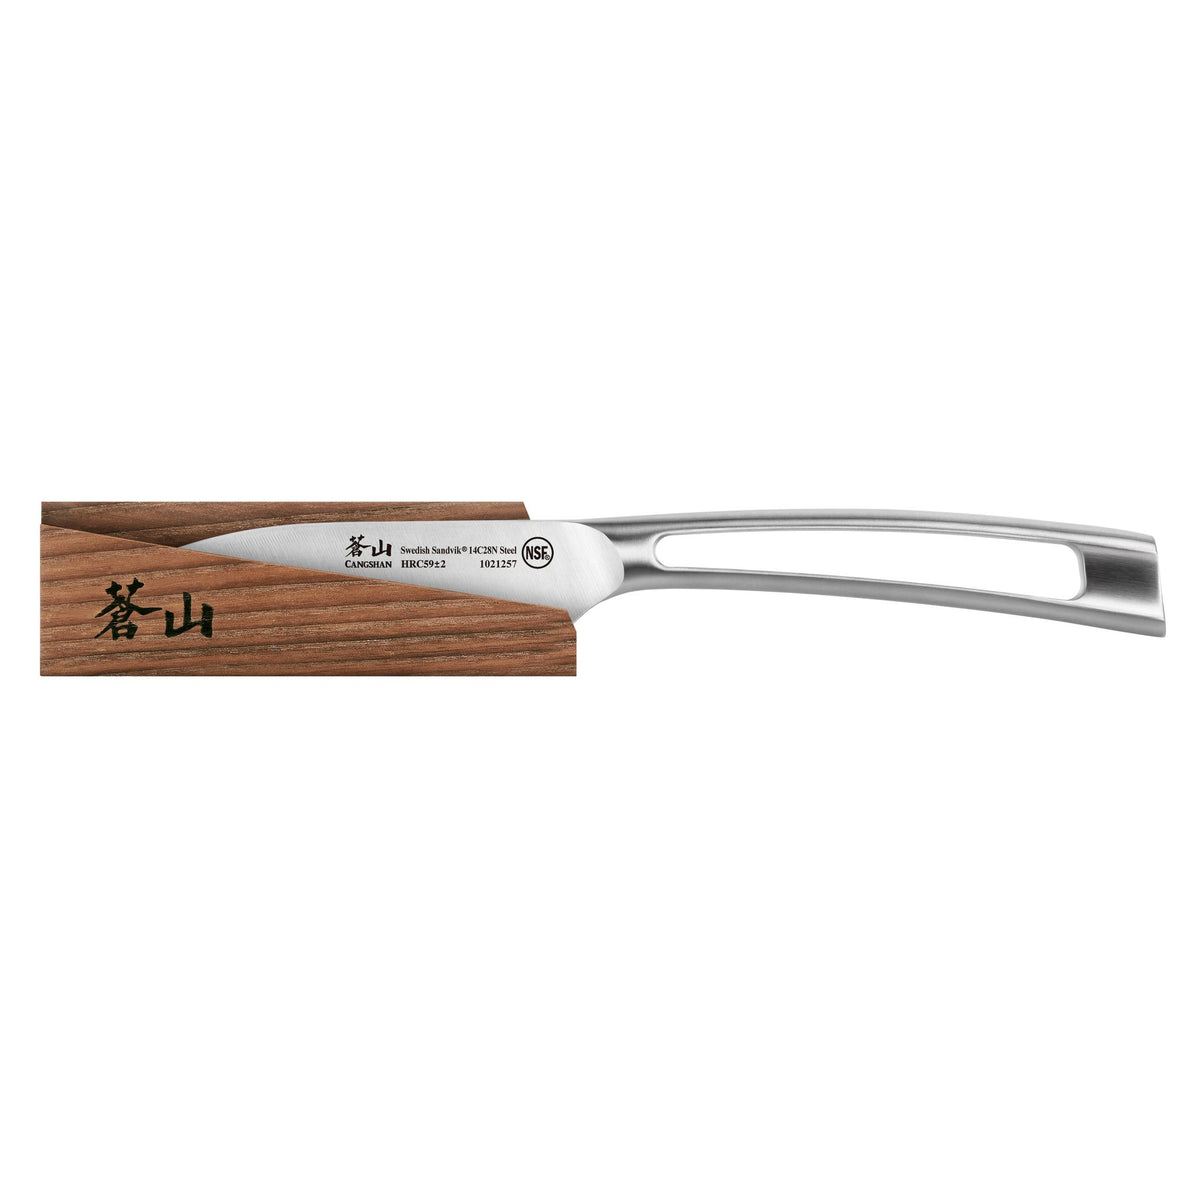 TN1 Series 3.5-Inch Paring Forged Cutlery with Company Sheath, 14C2 Knife Wood Swedish – Cangshan